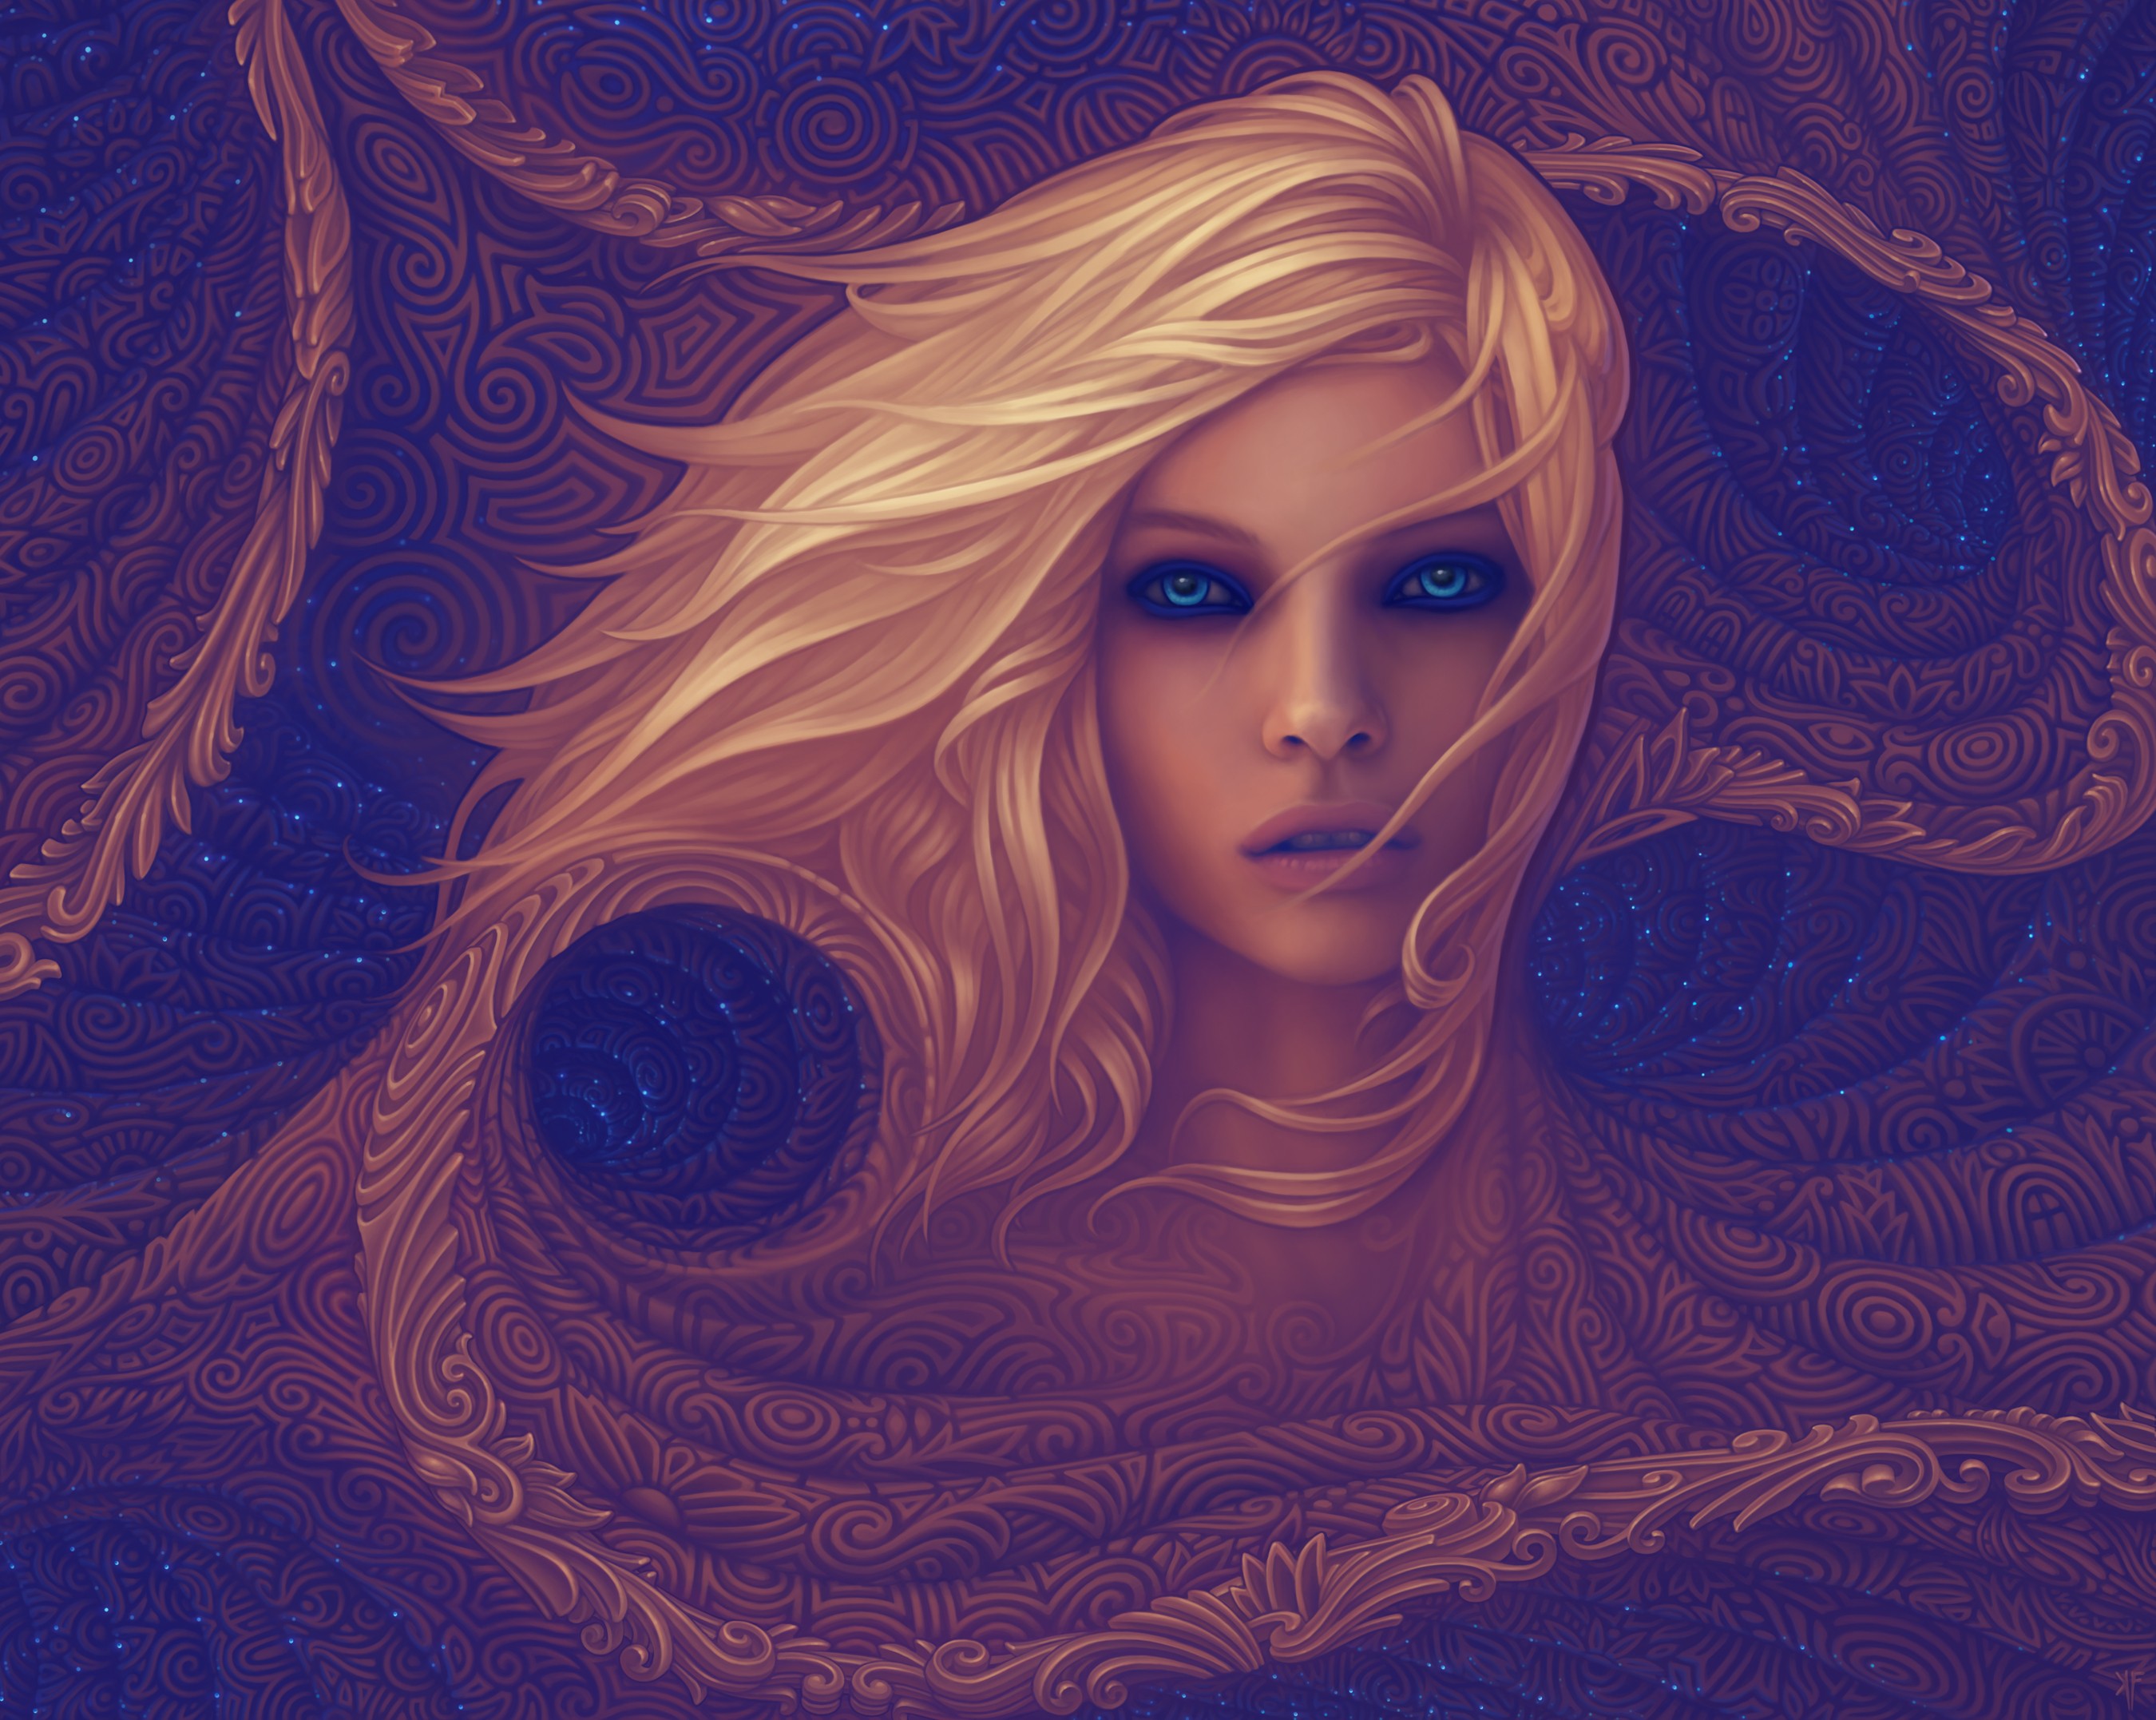 General 2700x2154 face women abstract blue eyes digital art artwork fantasy art fantasy girl long hair parted lips hair in face